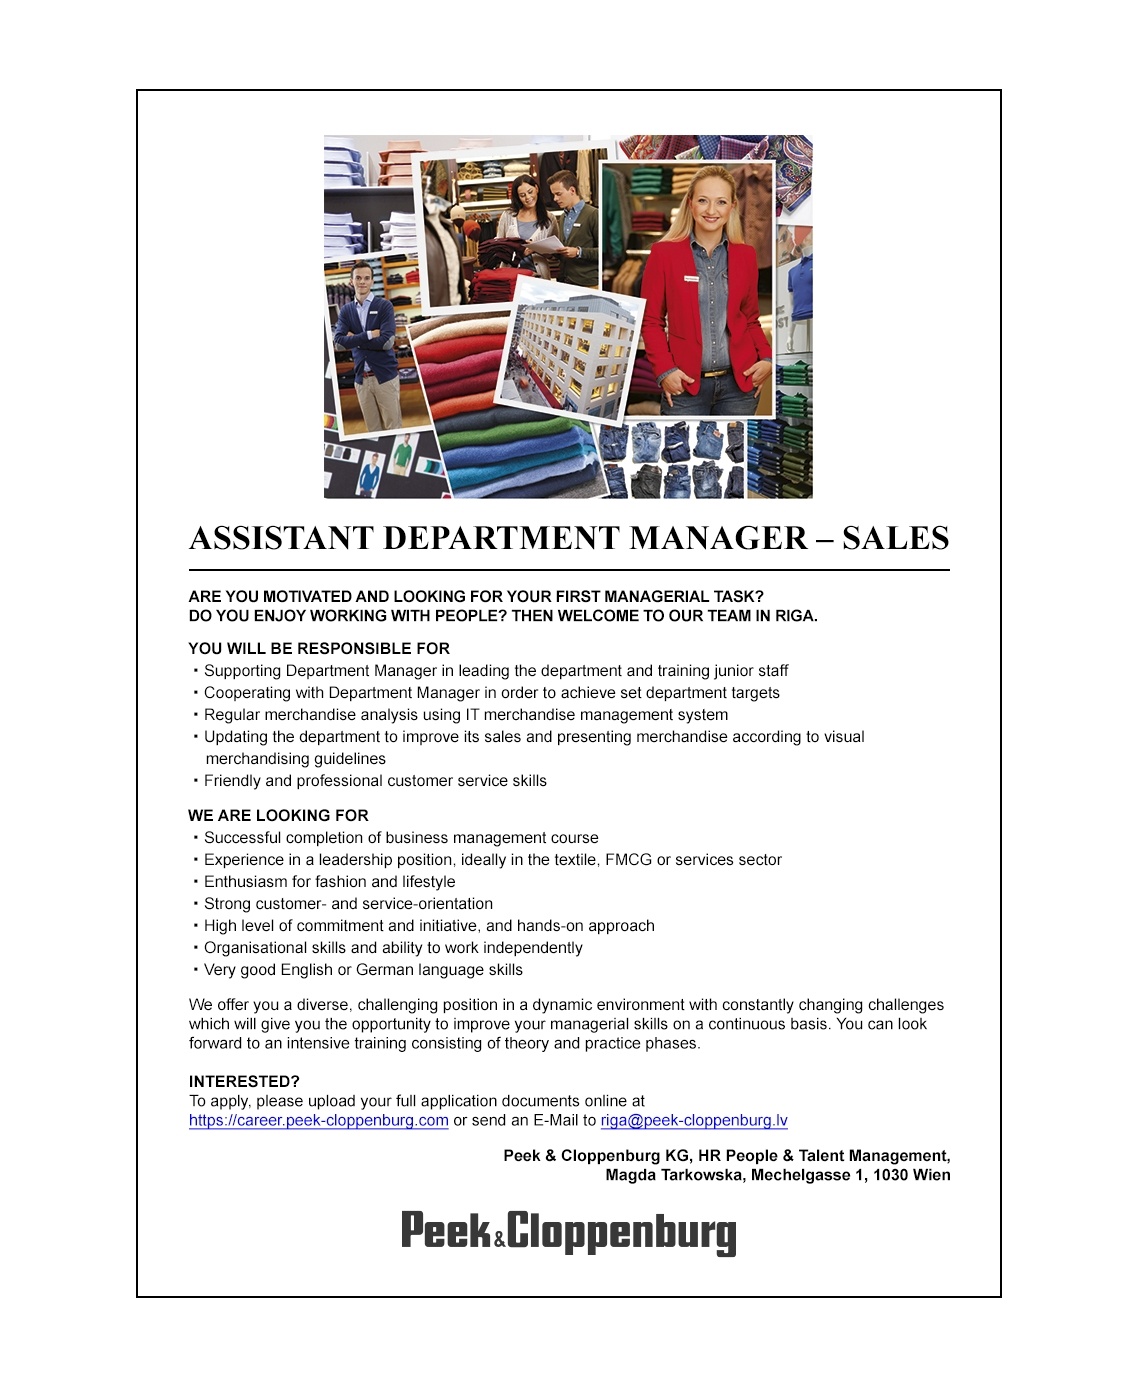 Peek & Cloppenburg, SIA Assistant Department Manager - Sales